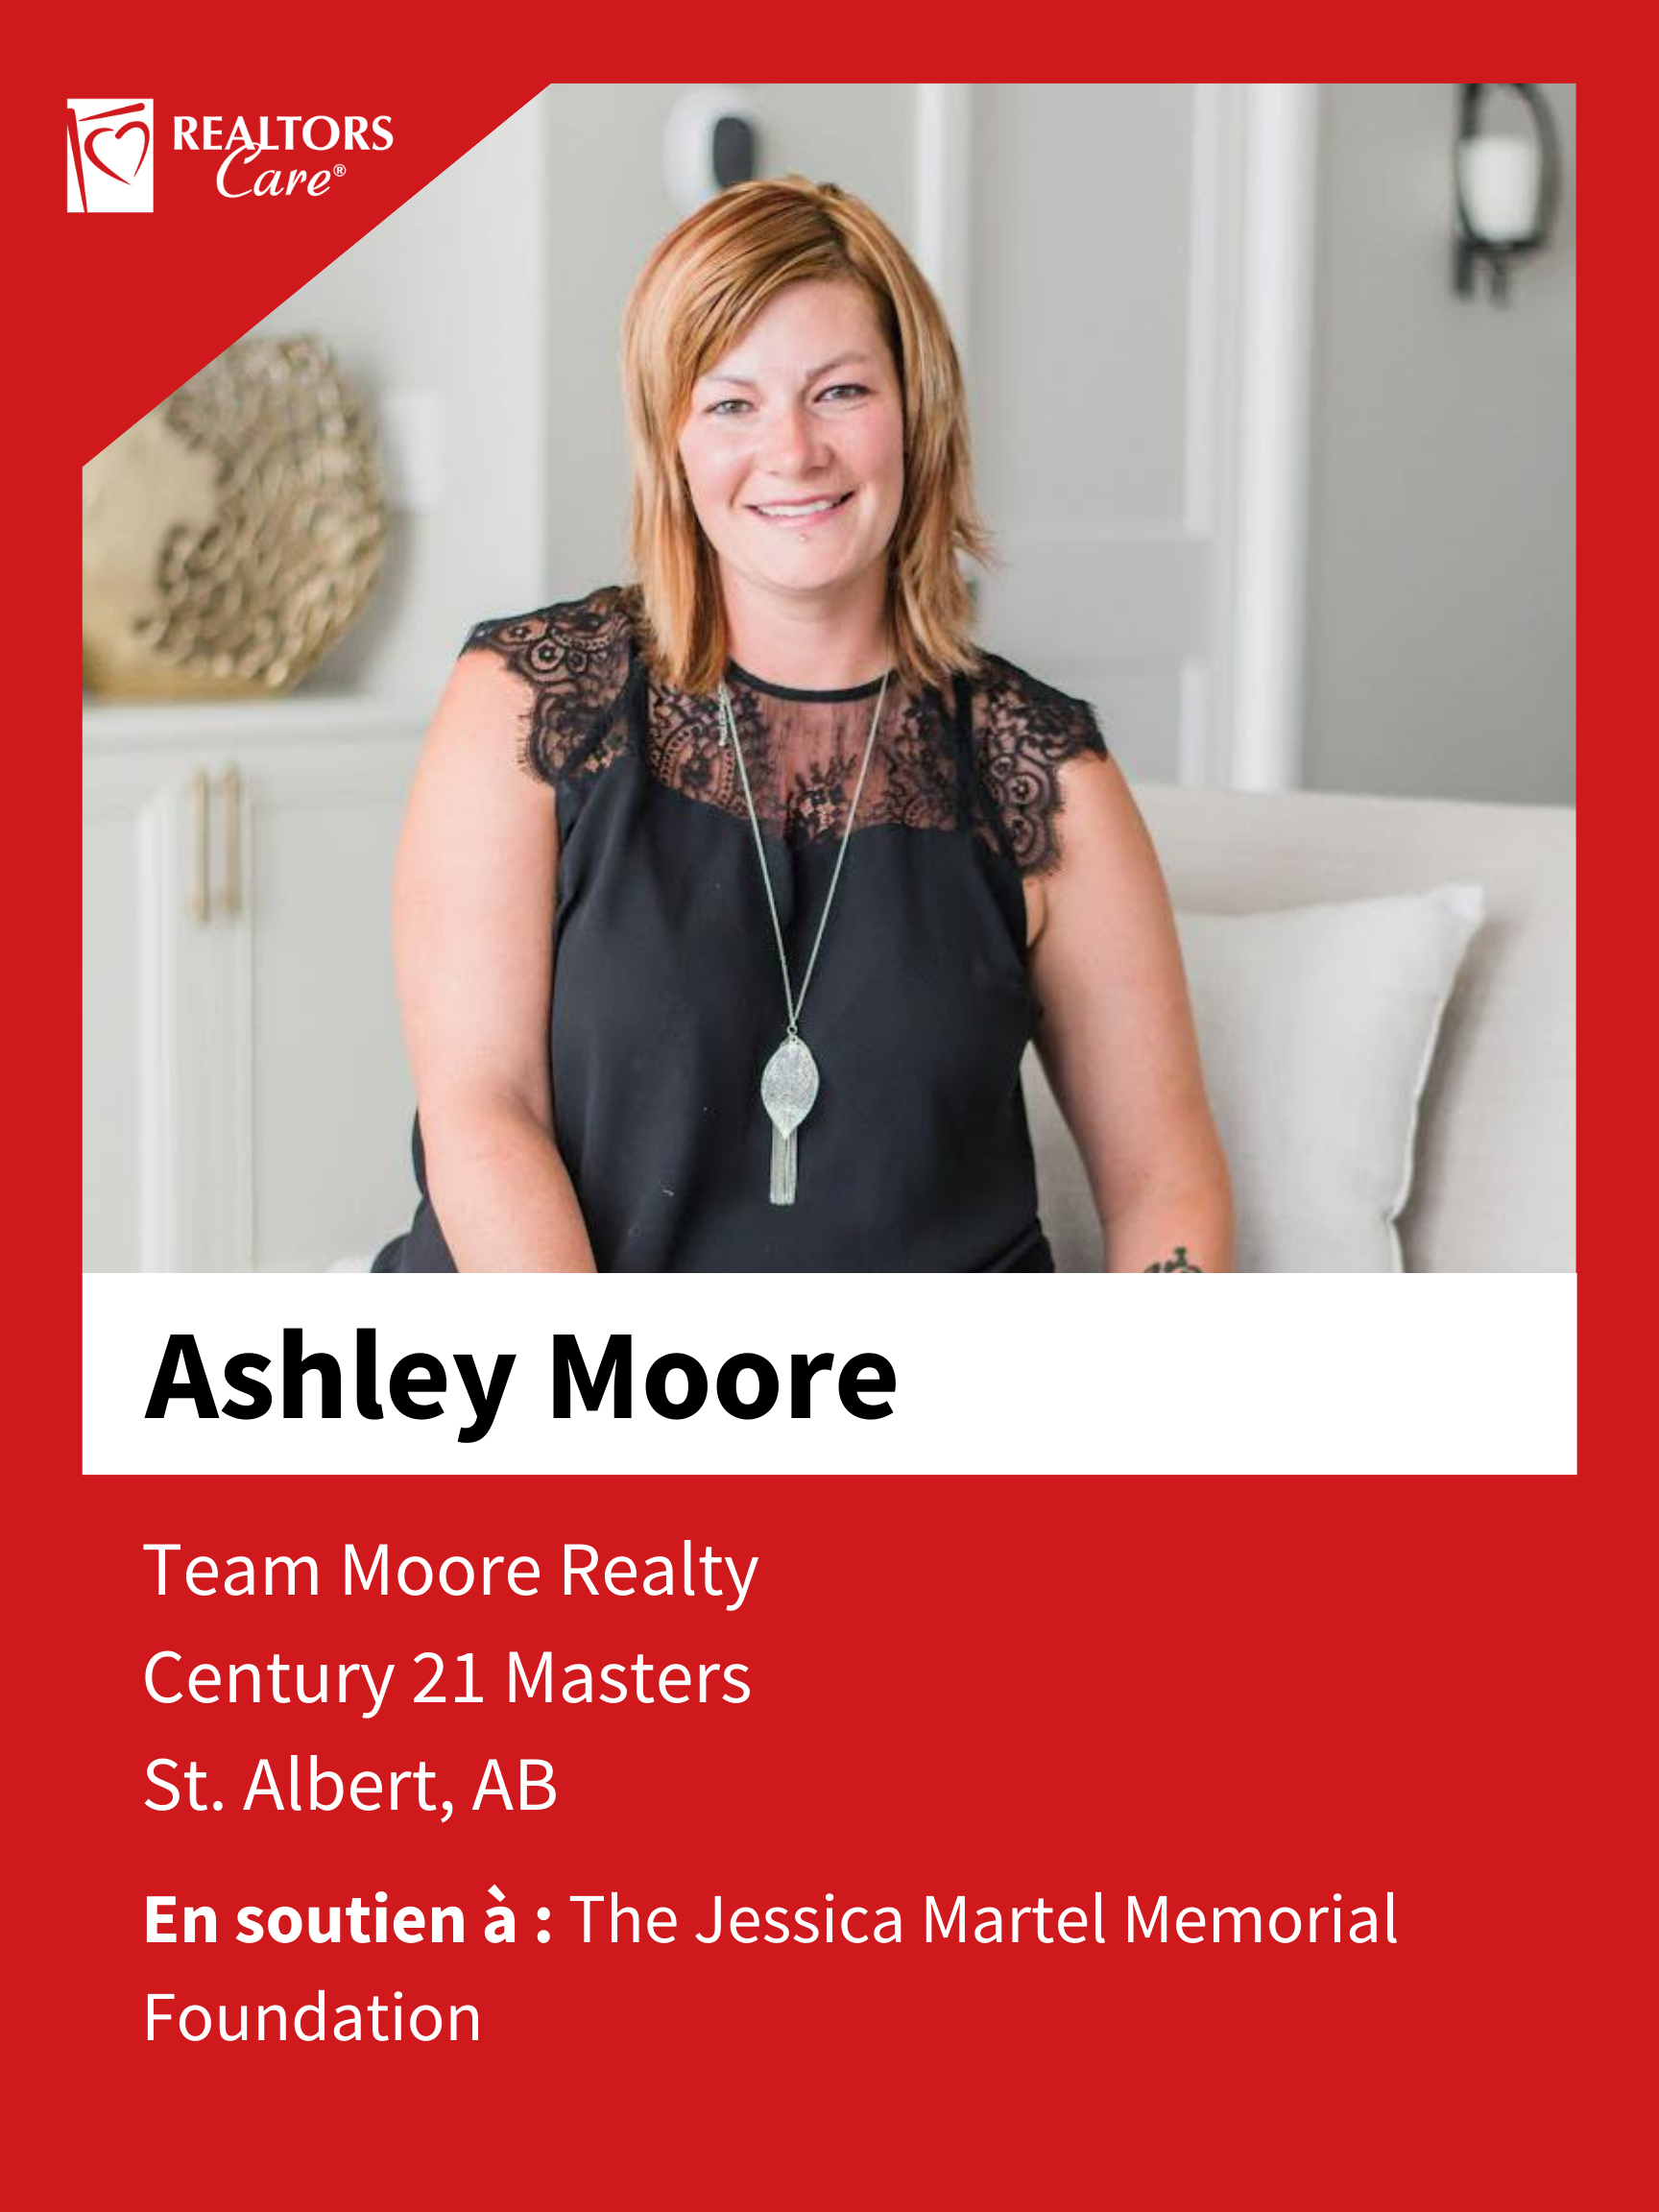 Ashley Moore
St. Albert	AB
